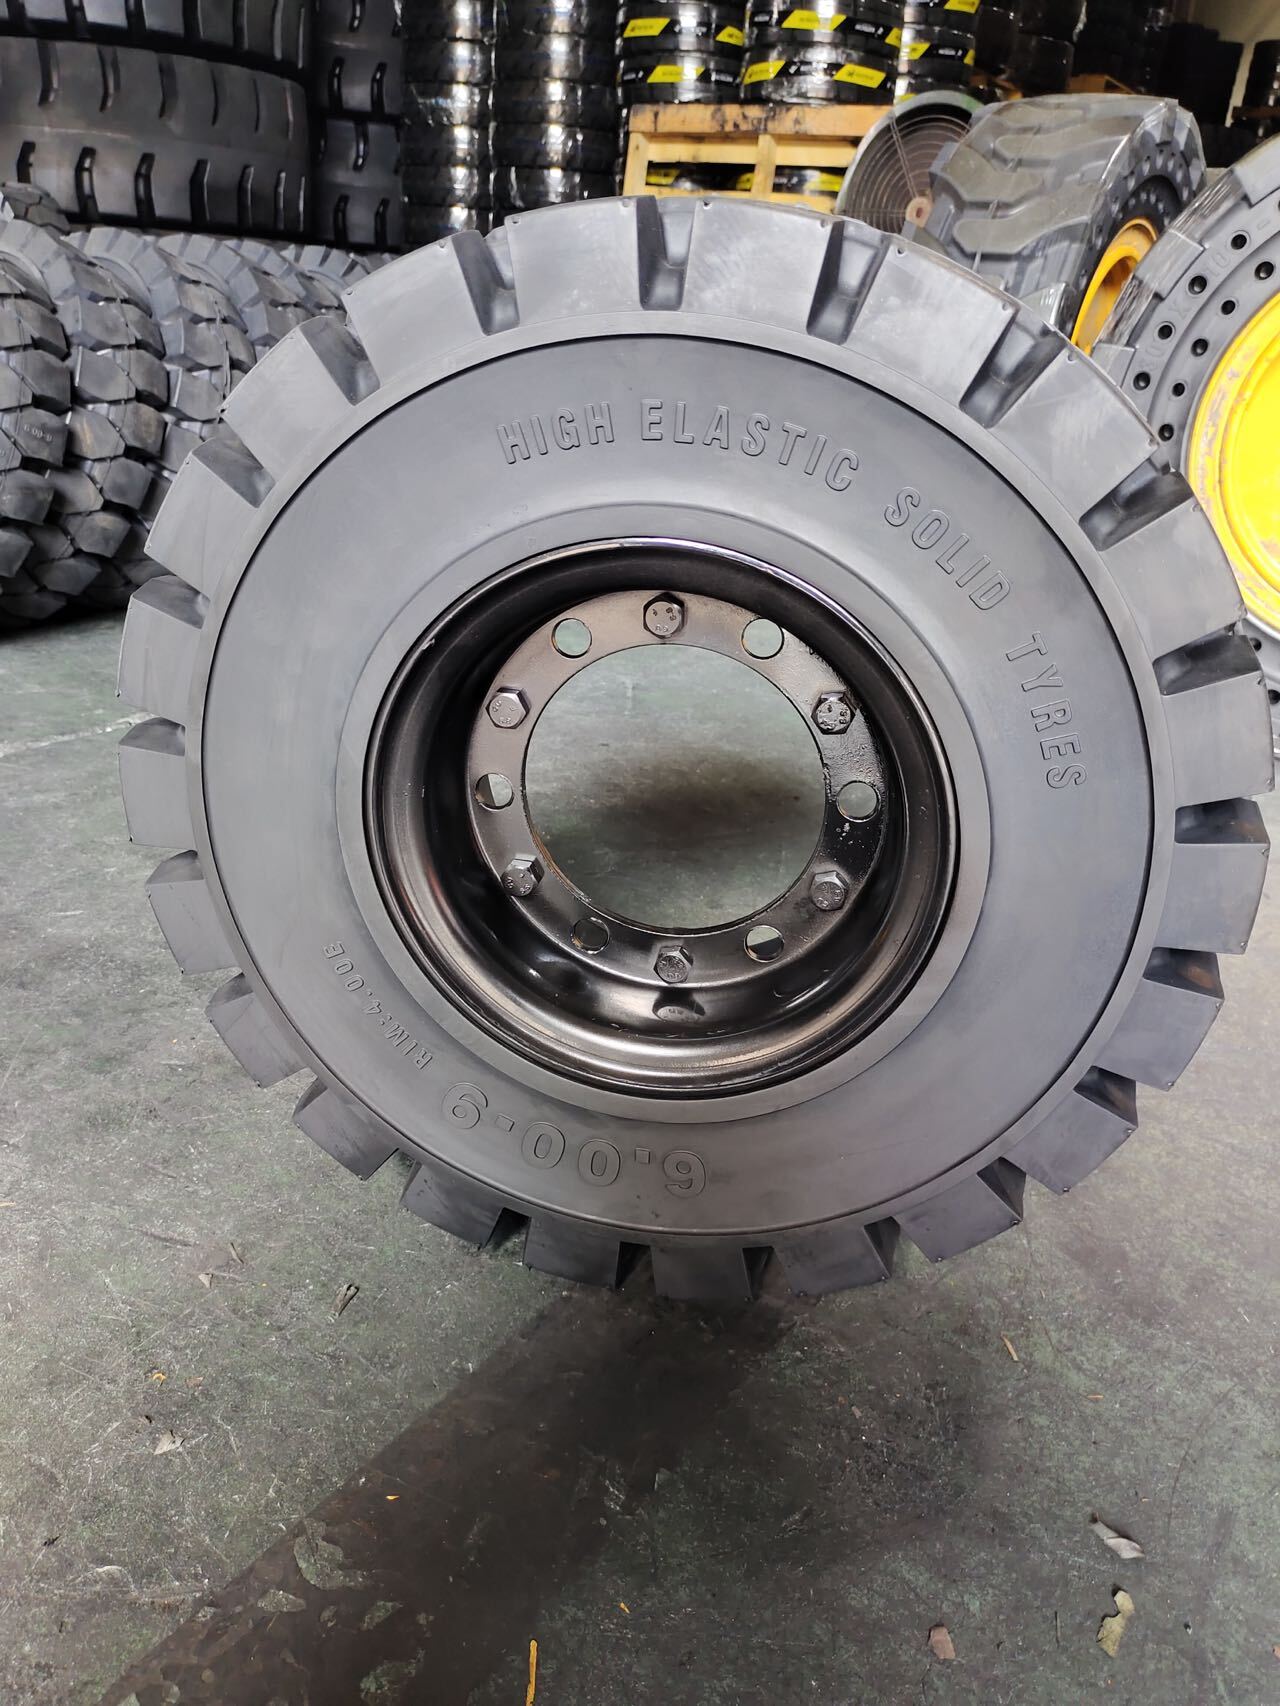 Tire manufacturer wholesale price 23x9-10 quick clip solid tires for linde forklift  